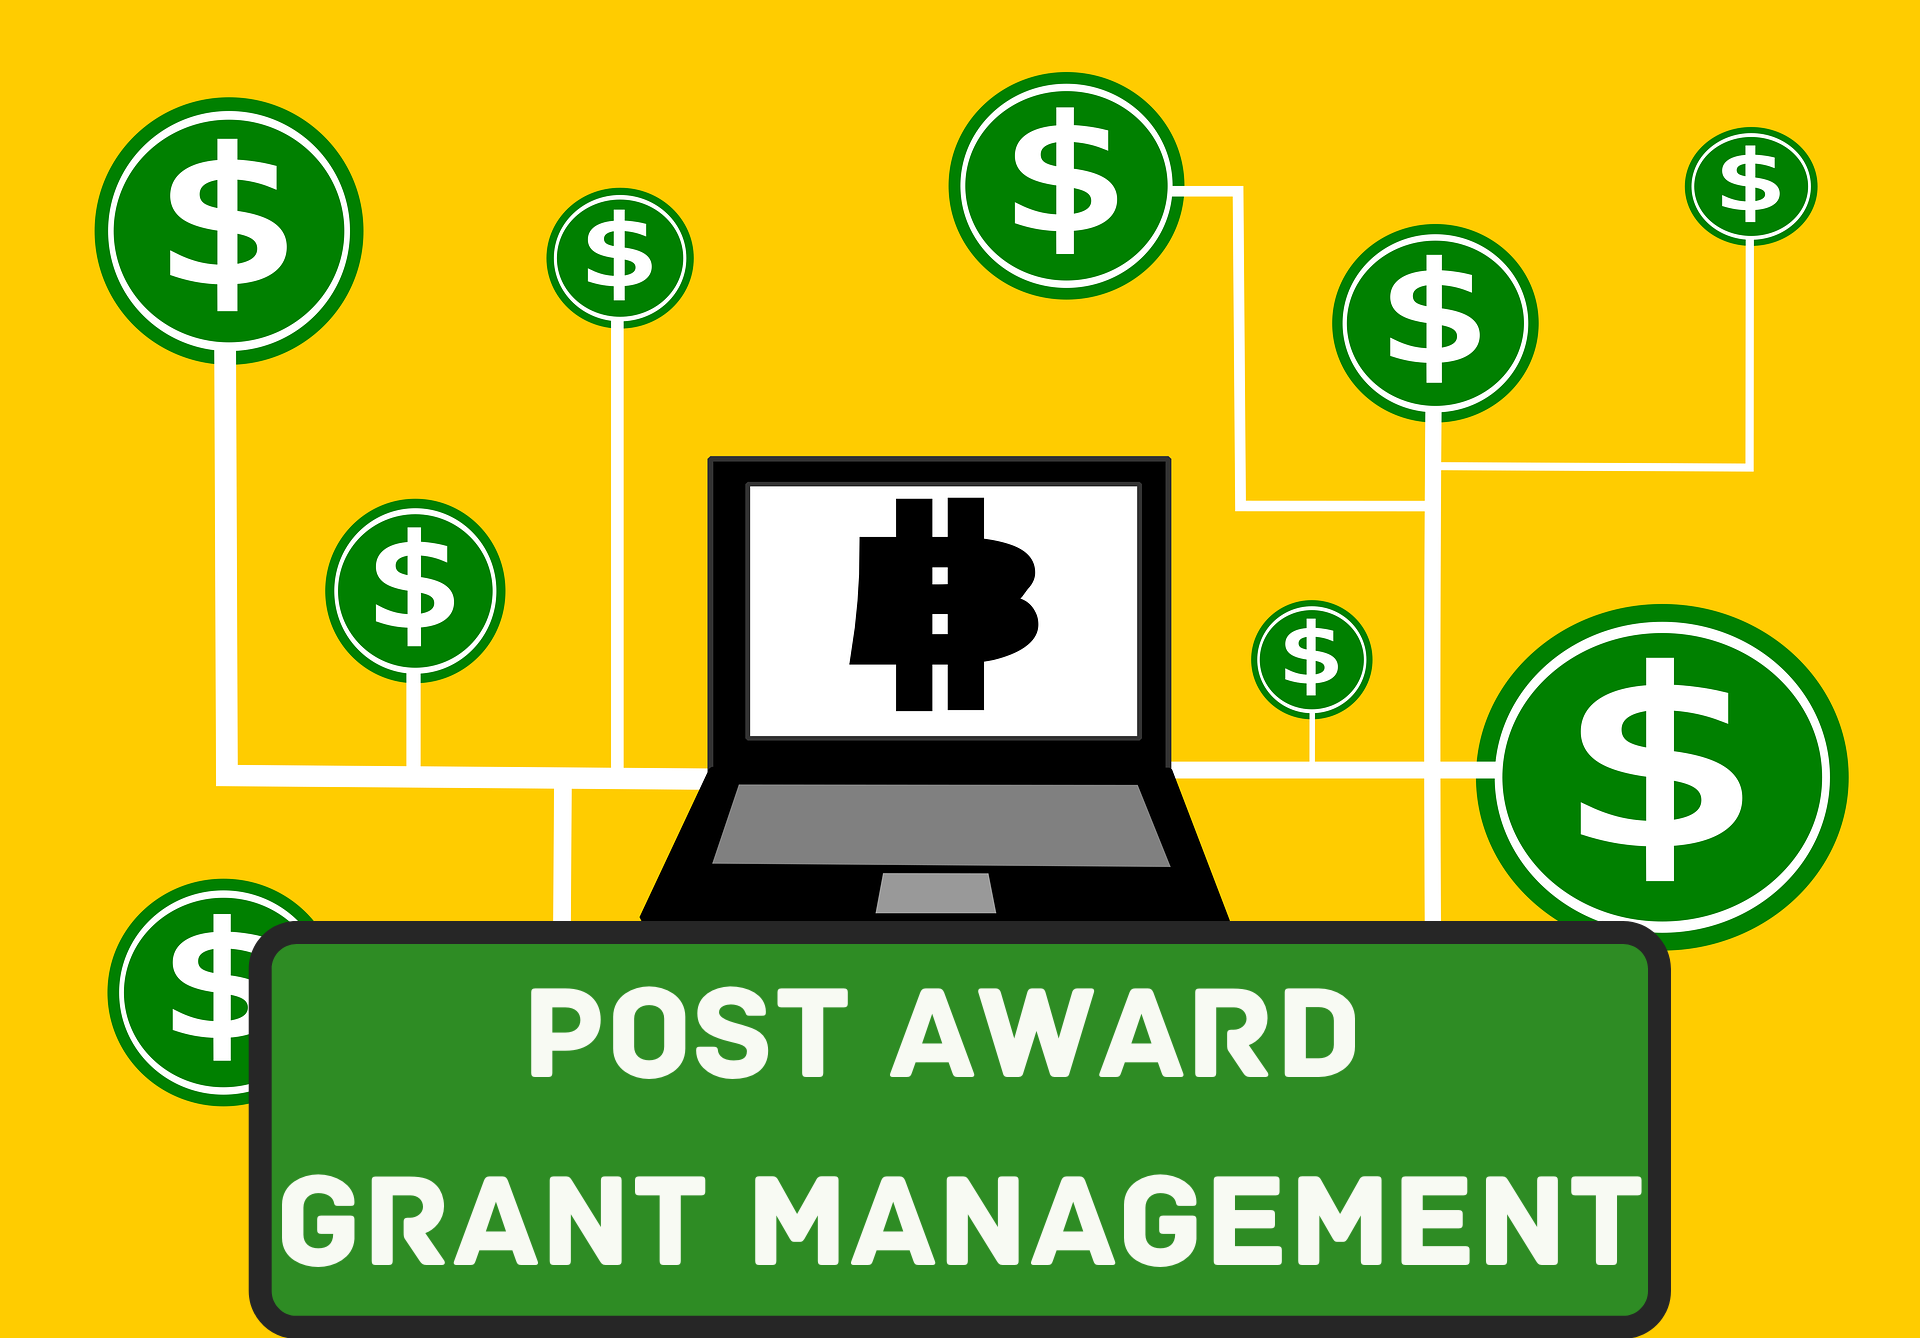 Post Award Grant Management